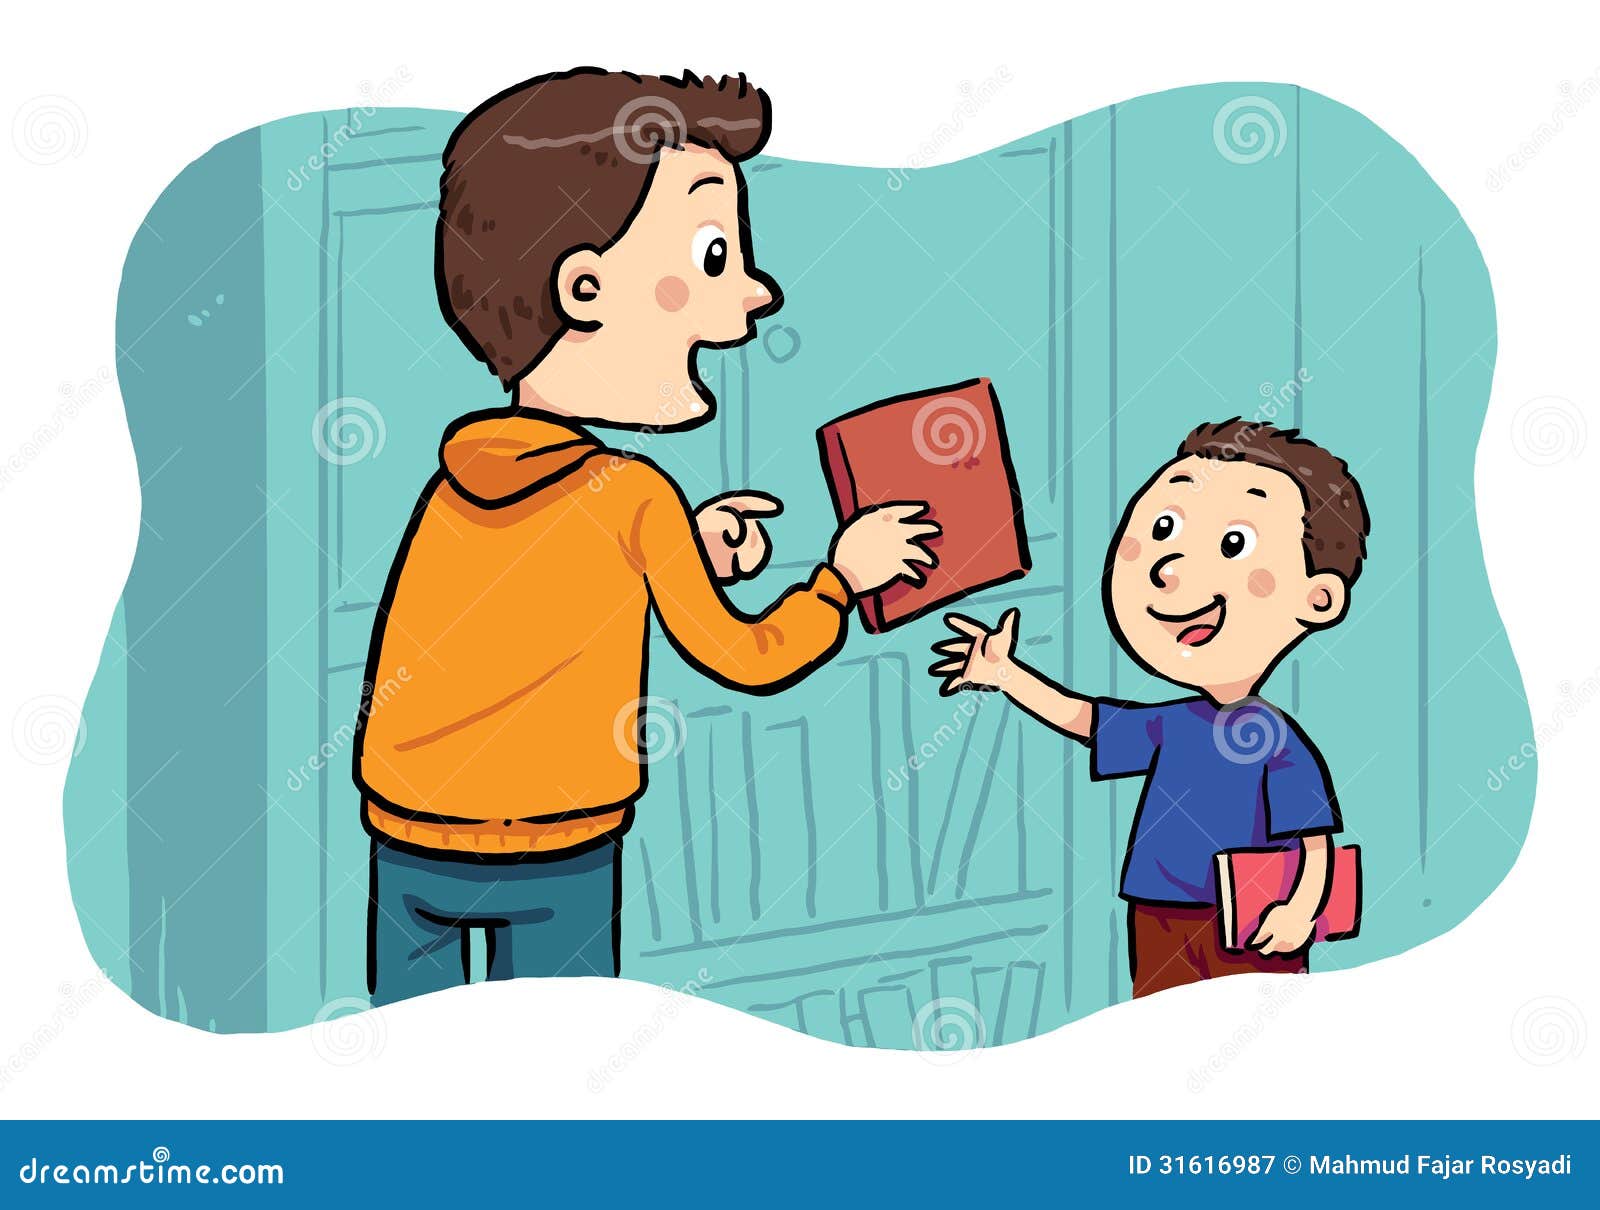 You can take books. Одалживать иллюстрация. Take рисунок. Мальчик дает книгу. Borrow картинка для детей.